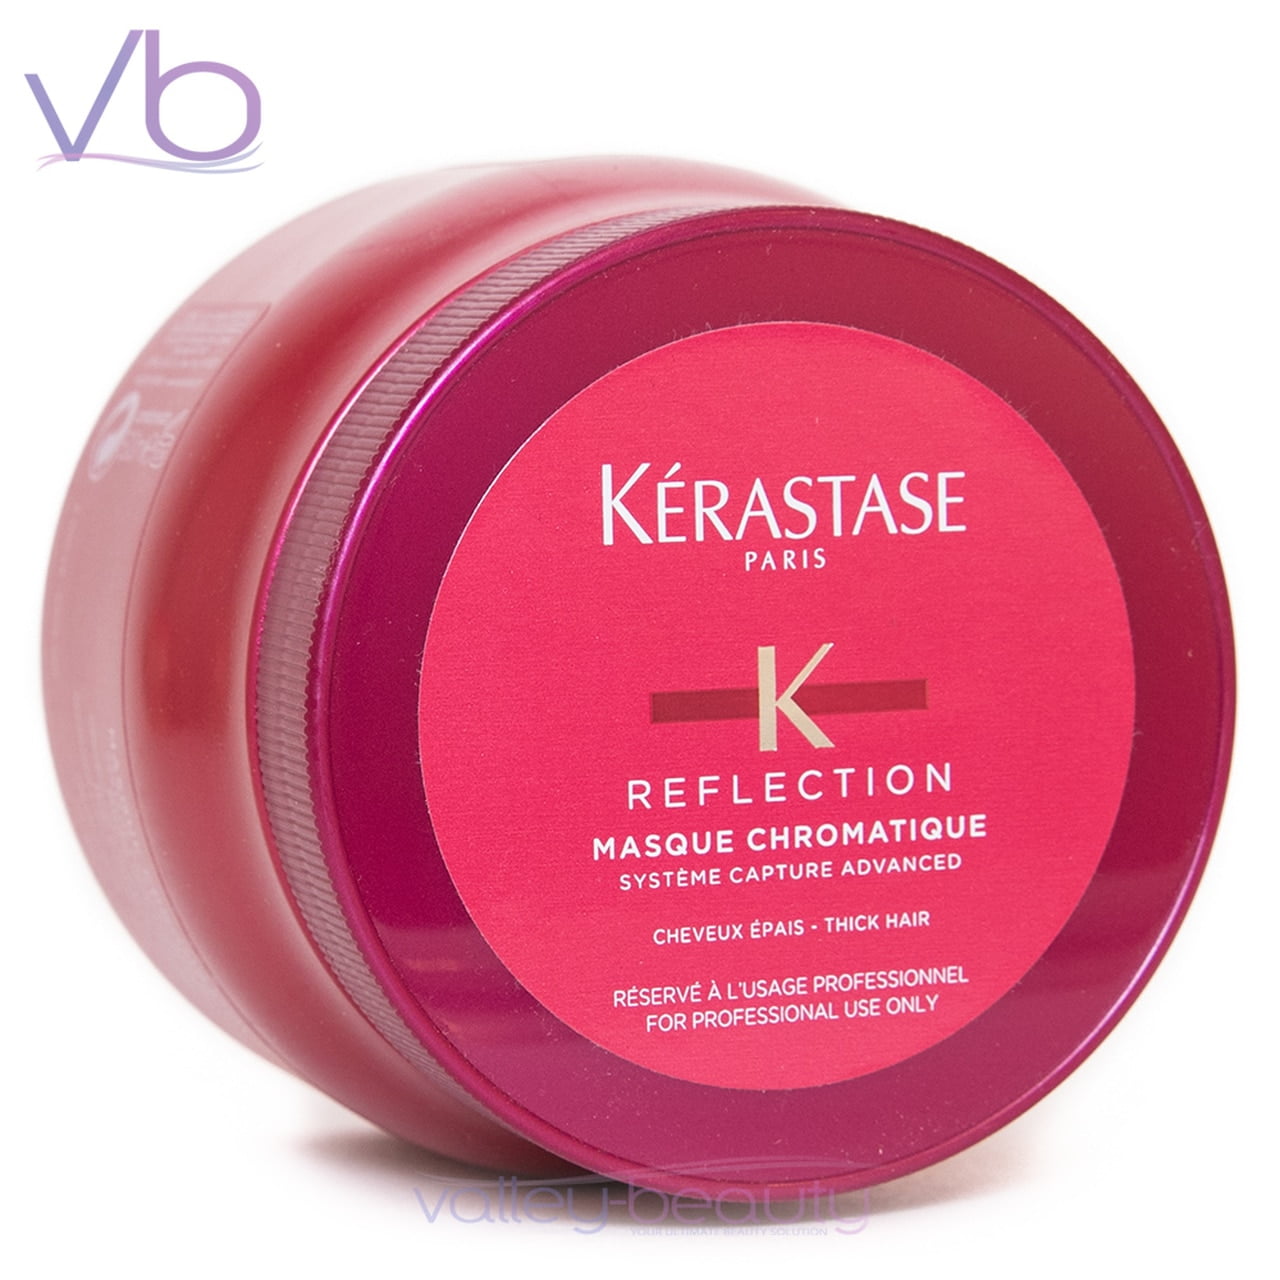 Kerastase Reflection Hair Masque Chromatique For Thick Hair, - Walmart.com